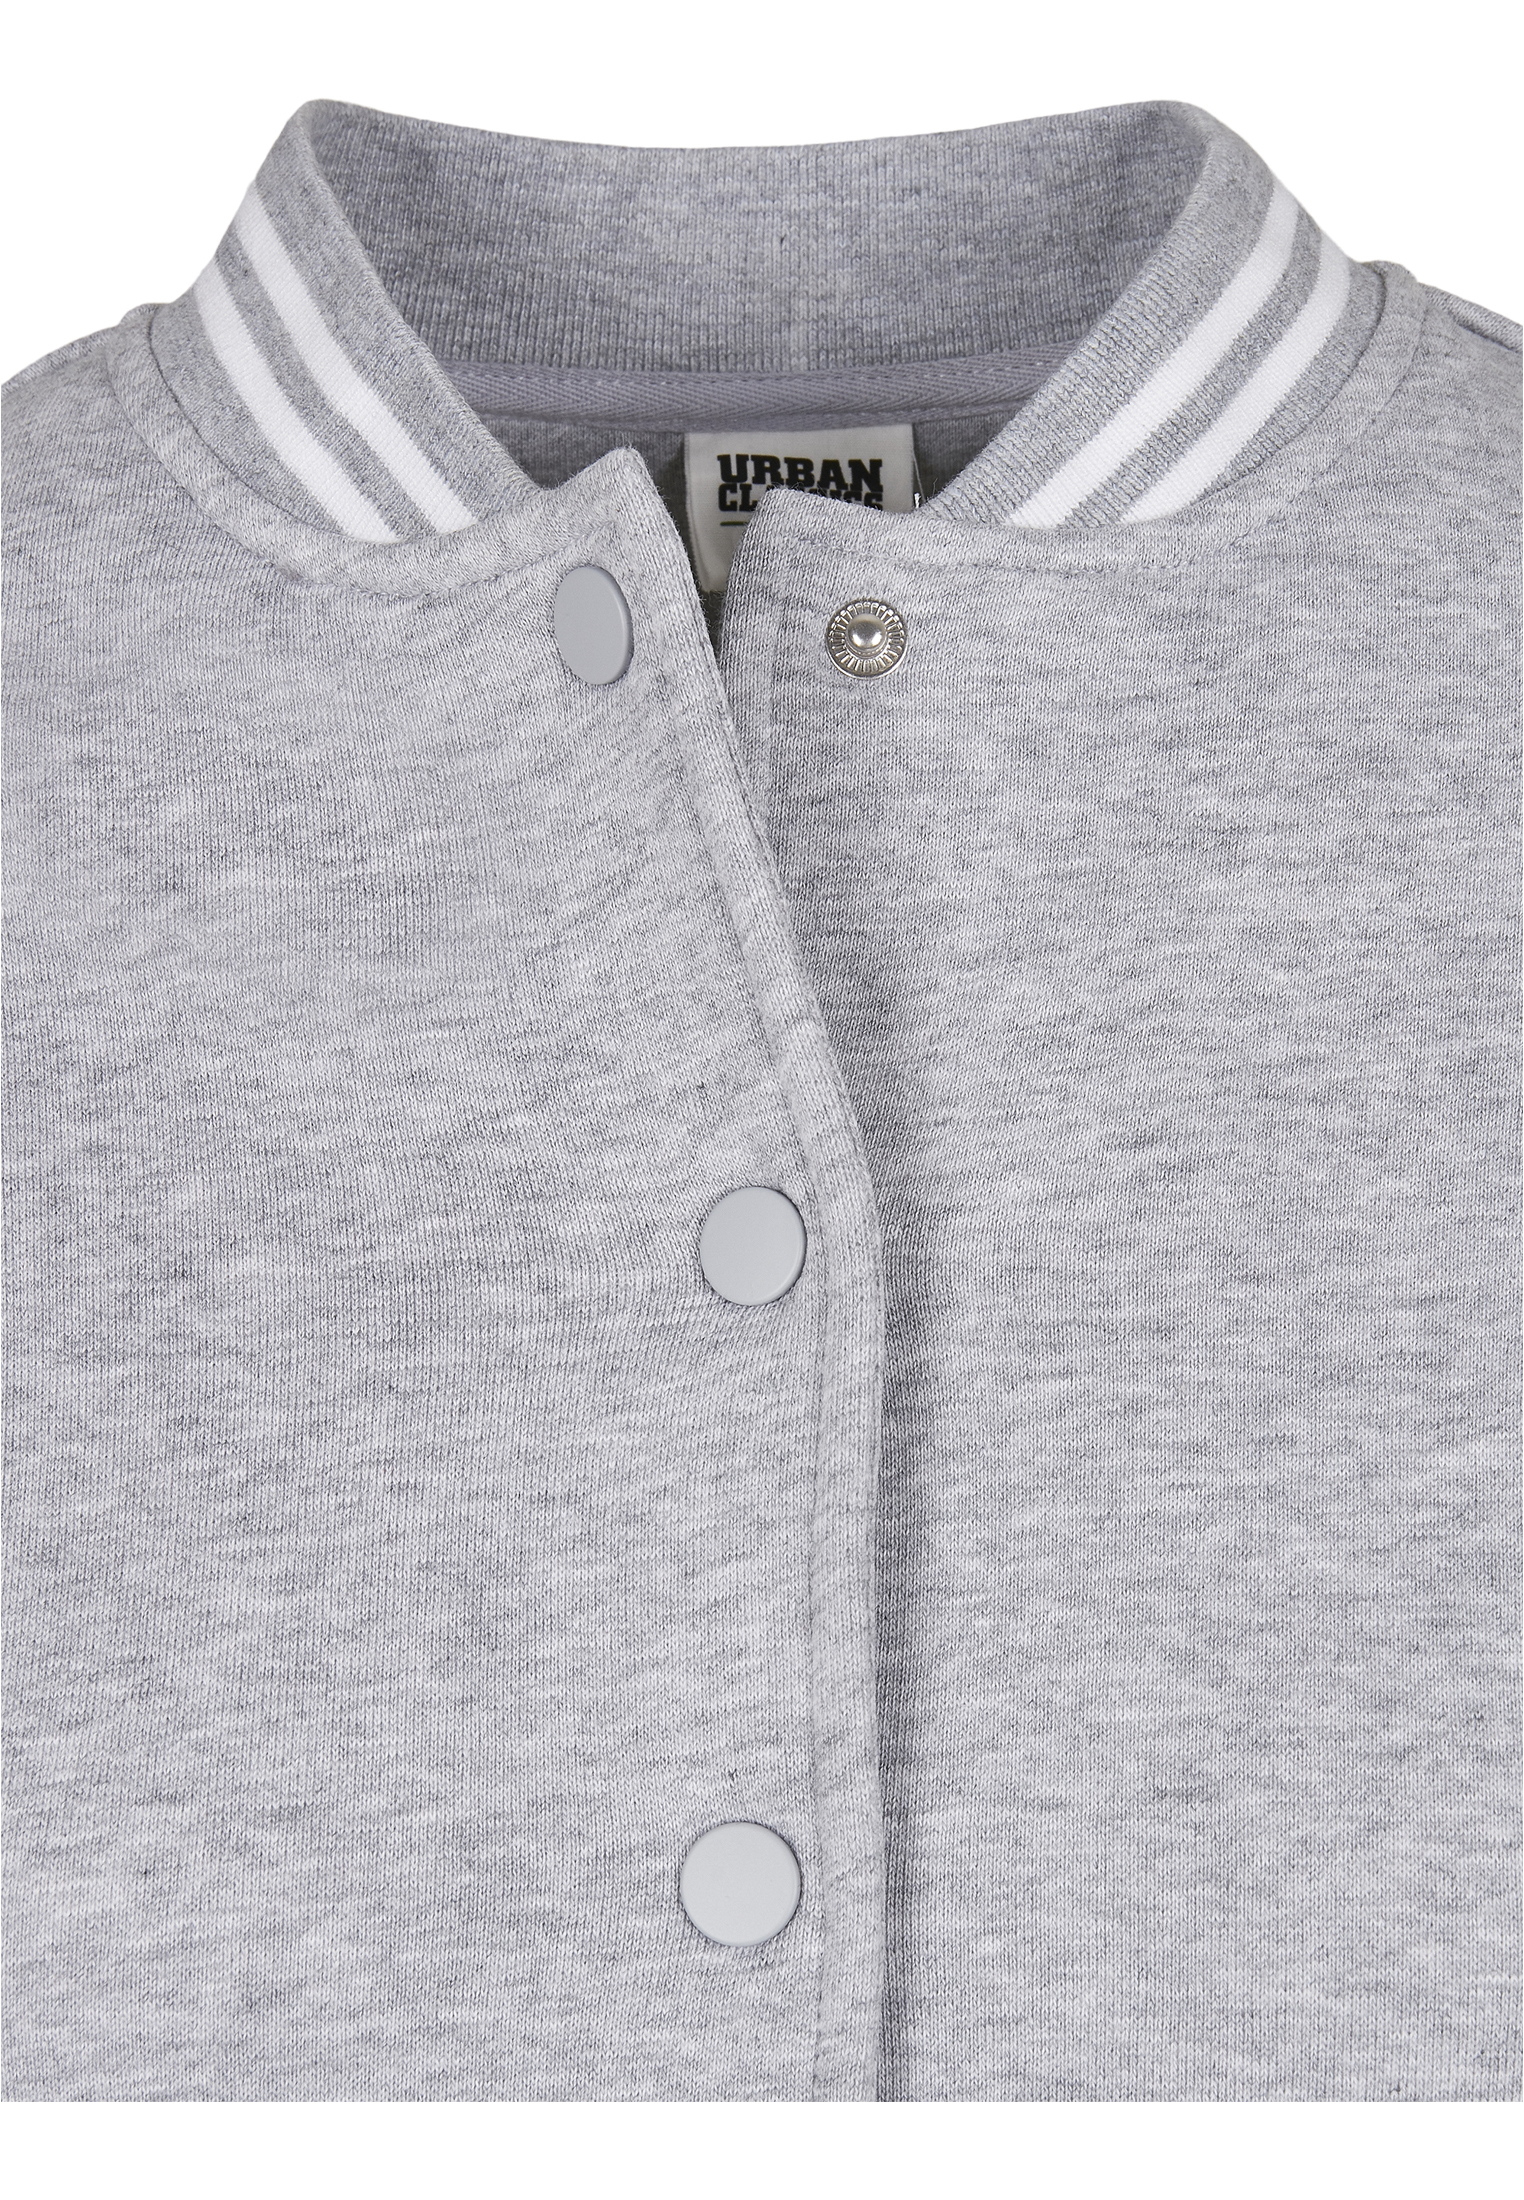 Nachhaltig Ladies Organic Inset College Sweat Jacket in Farbe grey/white